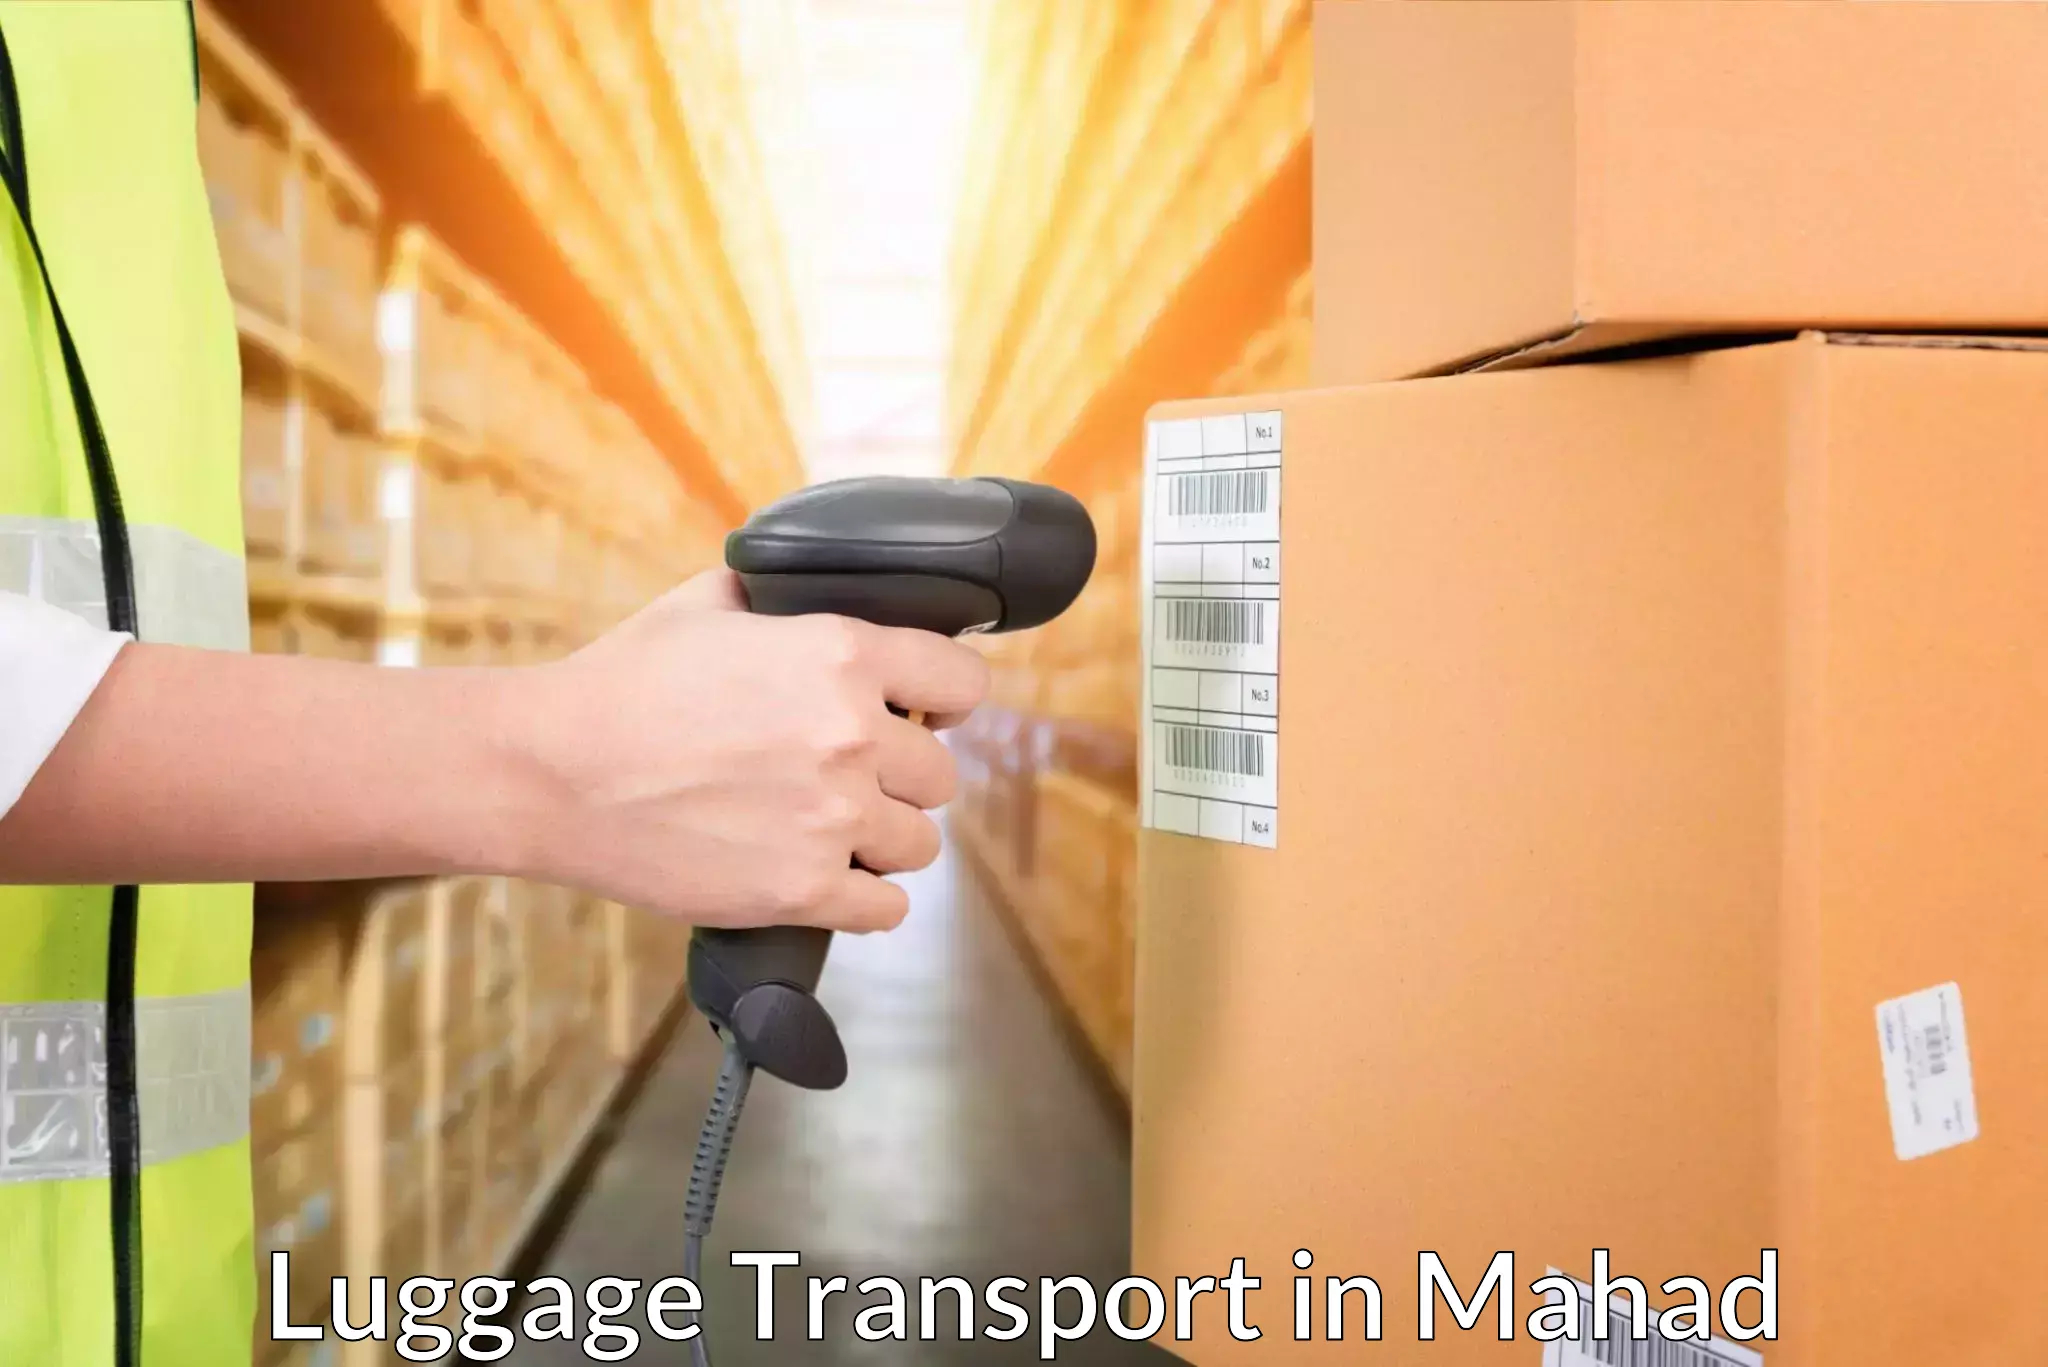 Luggage transport company in Mahad